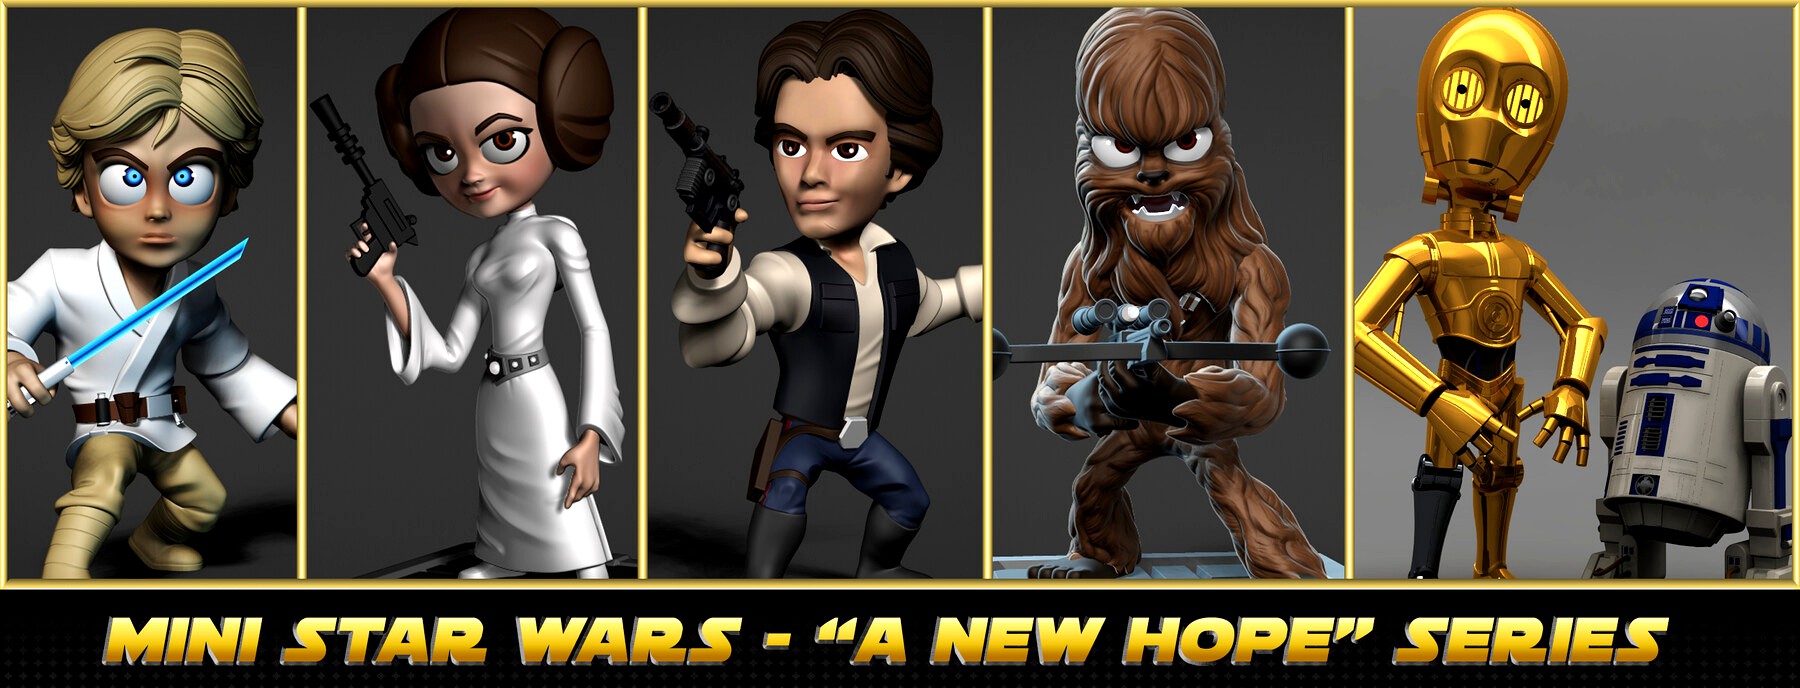 Mini Star Wars Series 1 - "A New Hope" figures